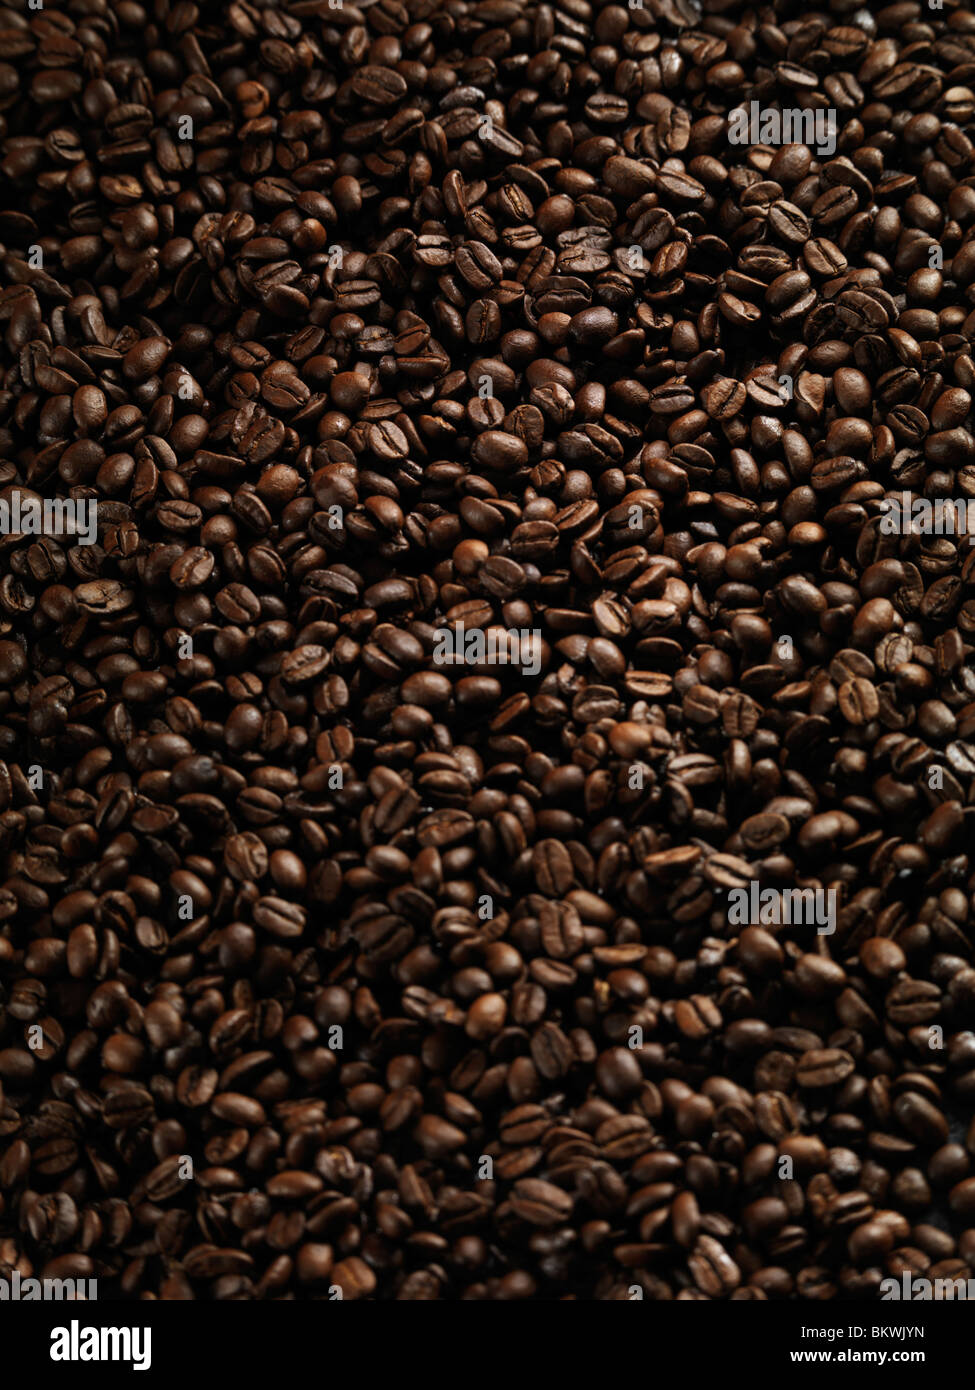 Les grains de café libre de texture de fond Banque D'Images